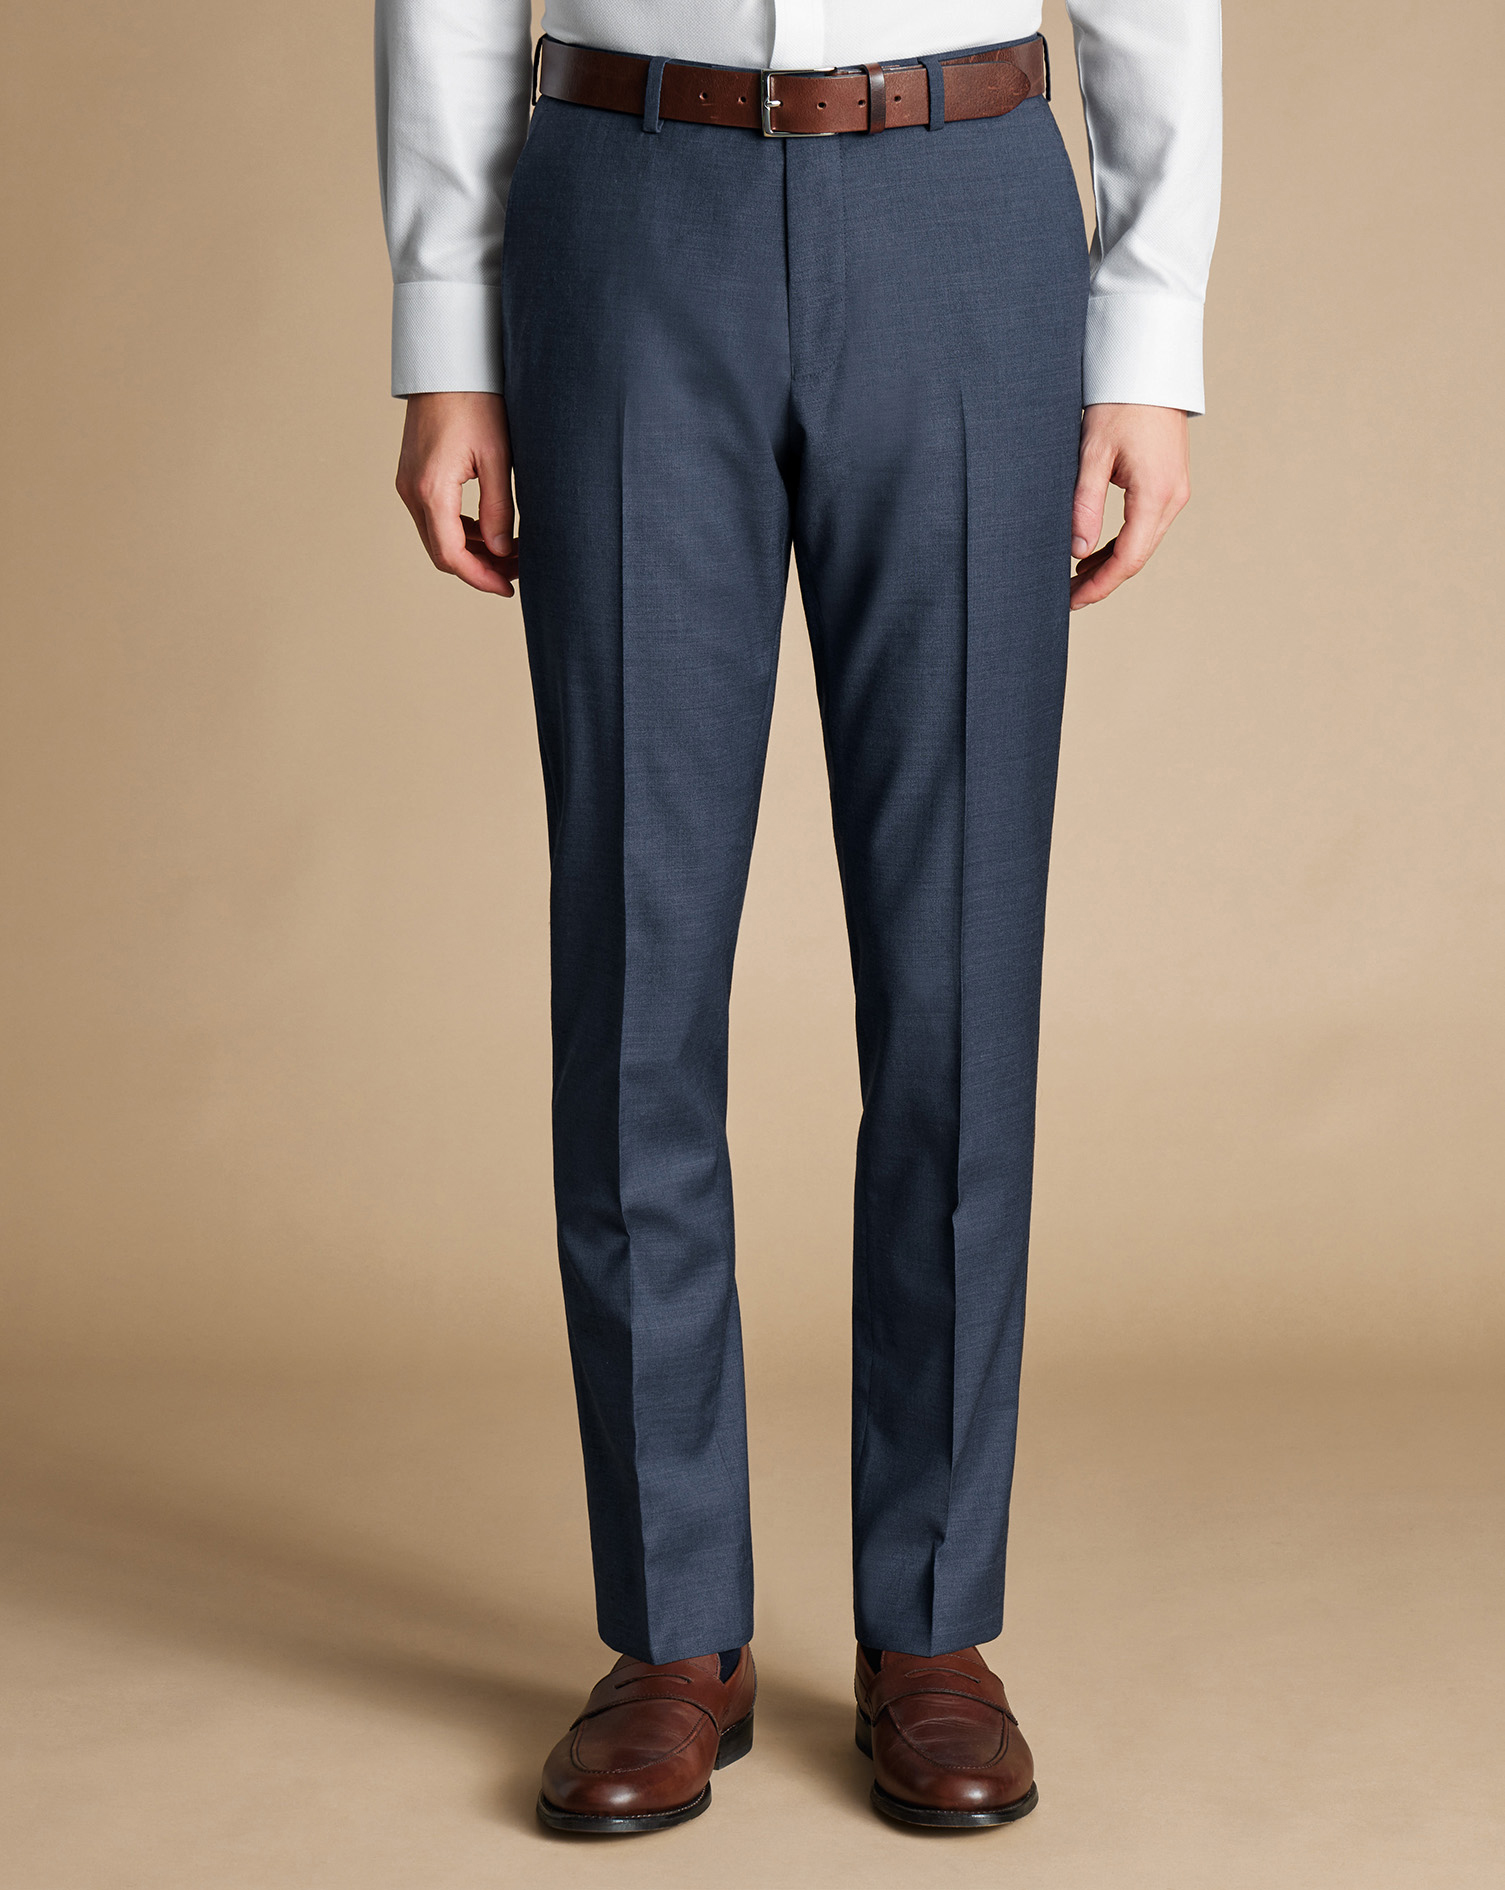 Men's Charles Tyrwhitt Italian Suit Trousers - Heather Blue Size 34/32
